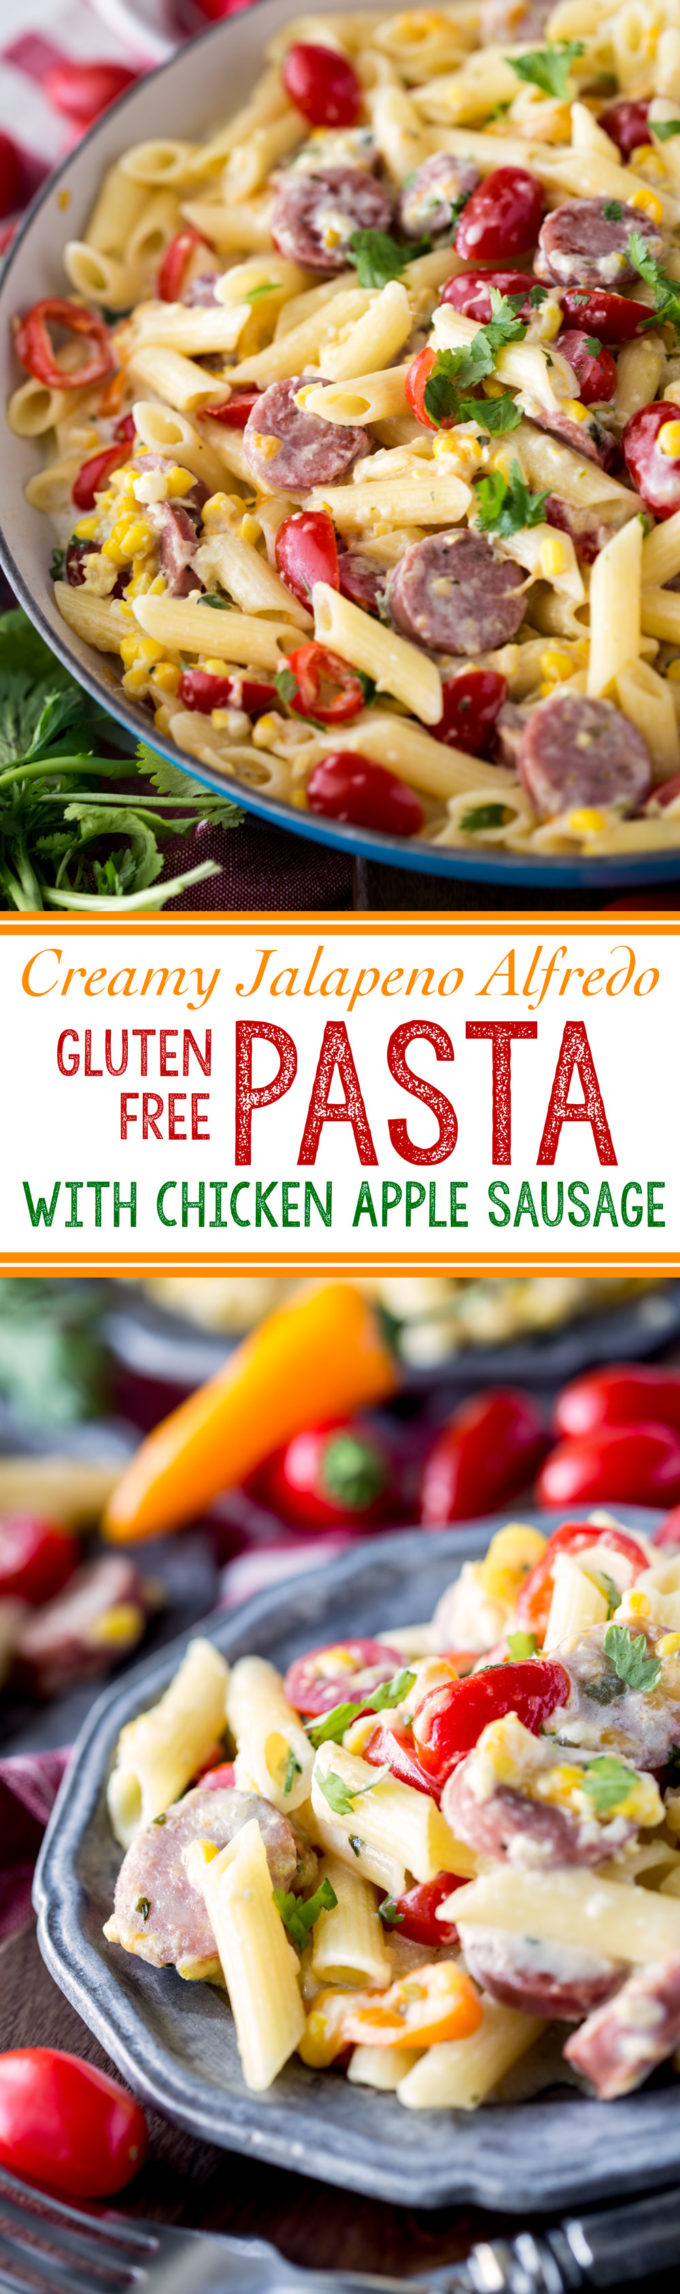 Creamy Jalapeno Alfredo with gluten free pasta and chicken apple sausage